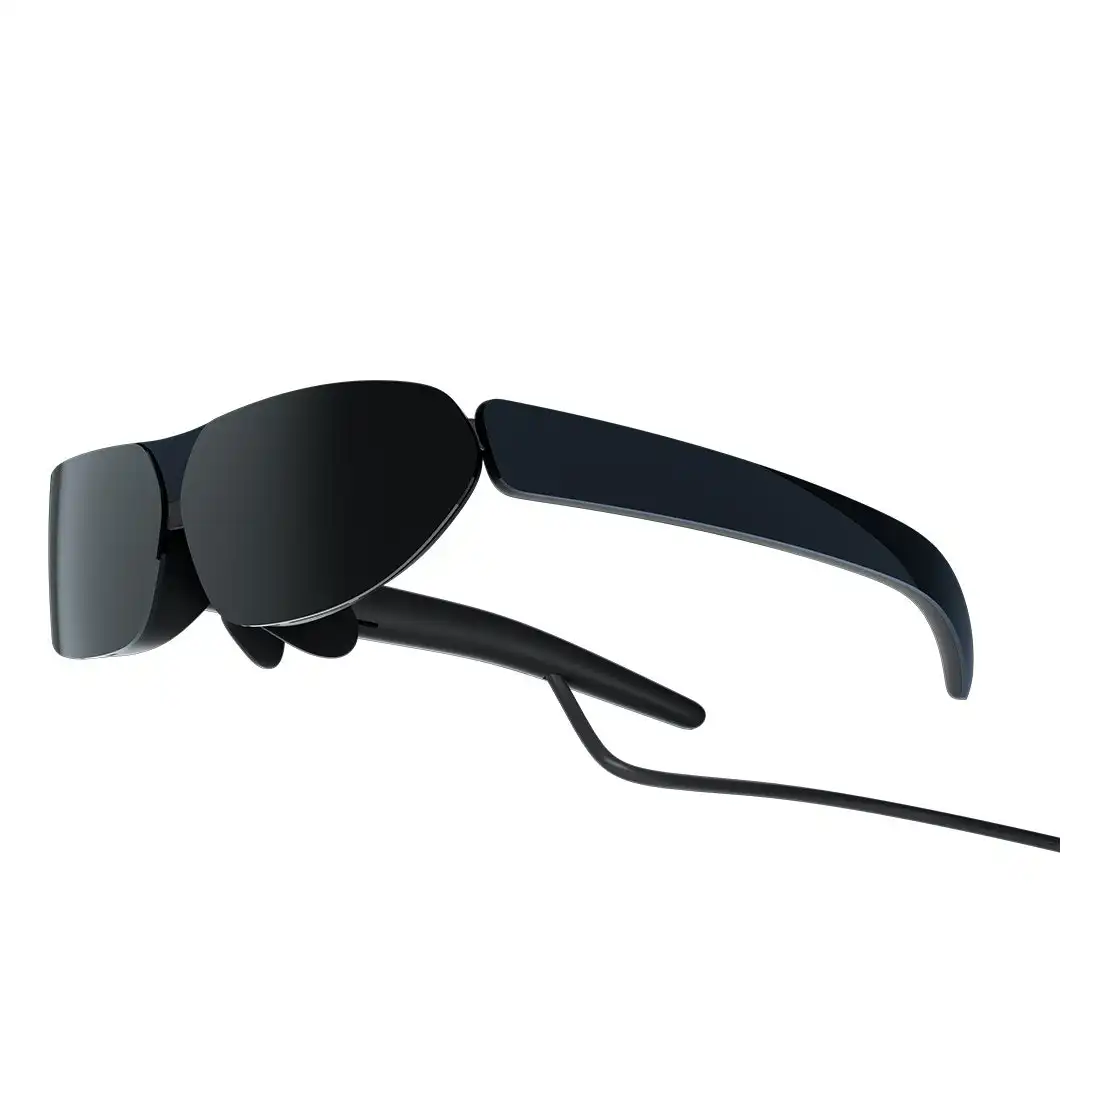 TCL NXTWEAR G Smart Glasses - Black